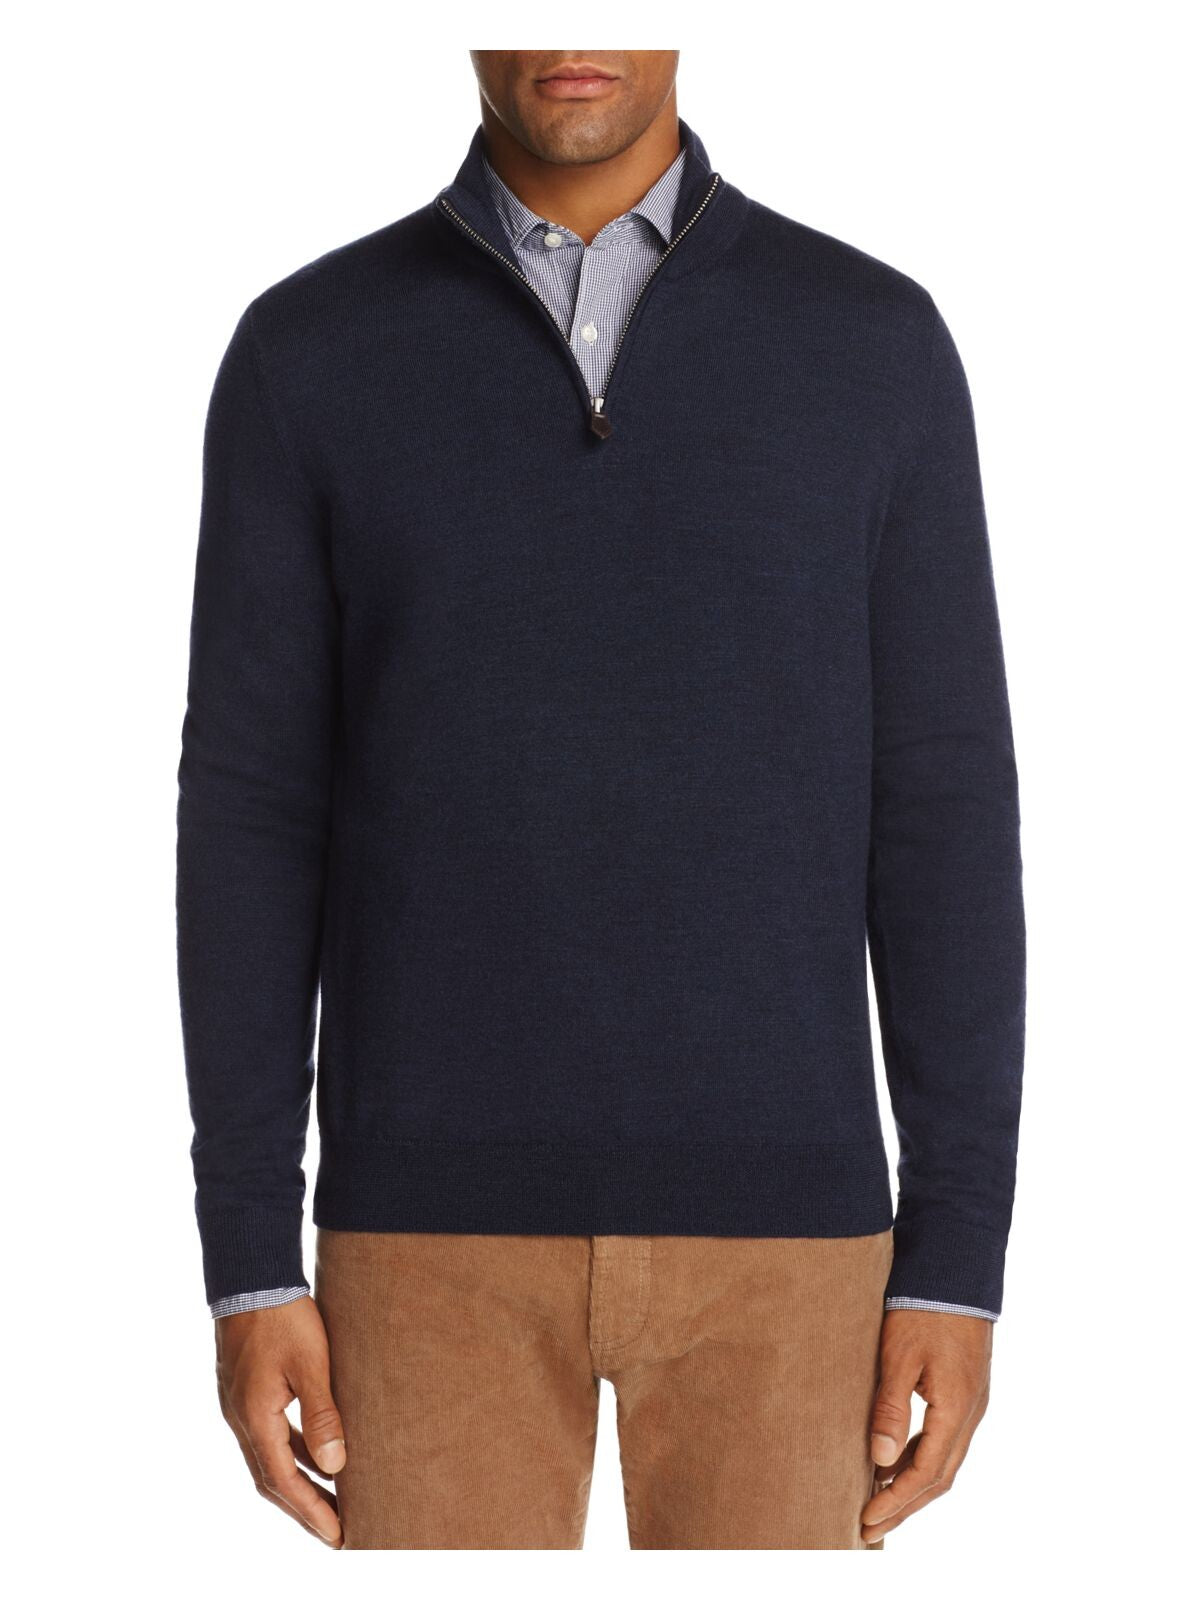 THE MENS STORE Mens Navy Mock Neck Classic Fit Quarter-Zip Merino Blend Pullover Sweater M